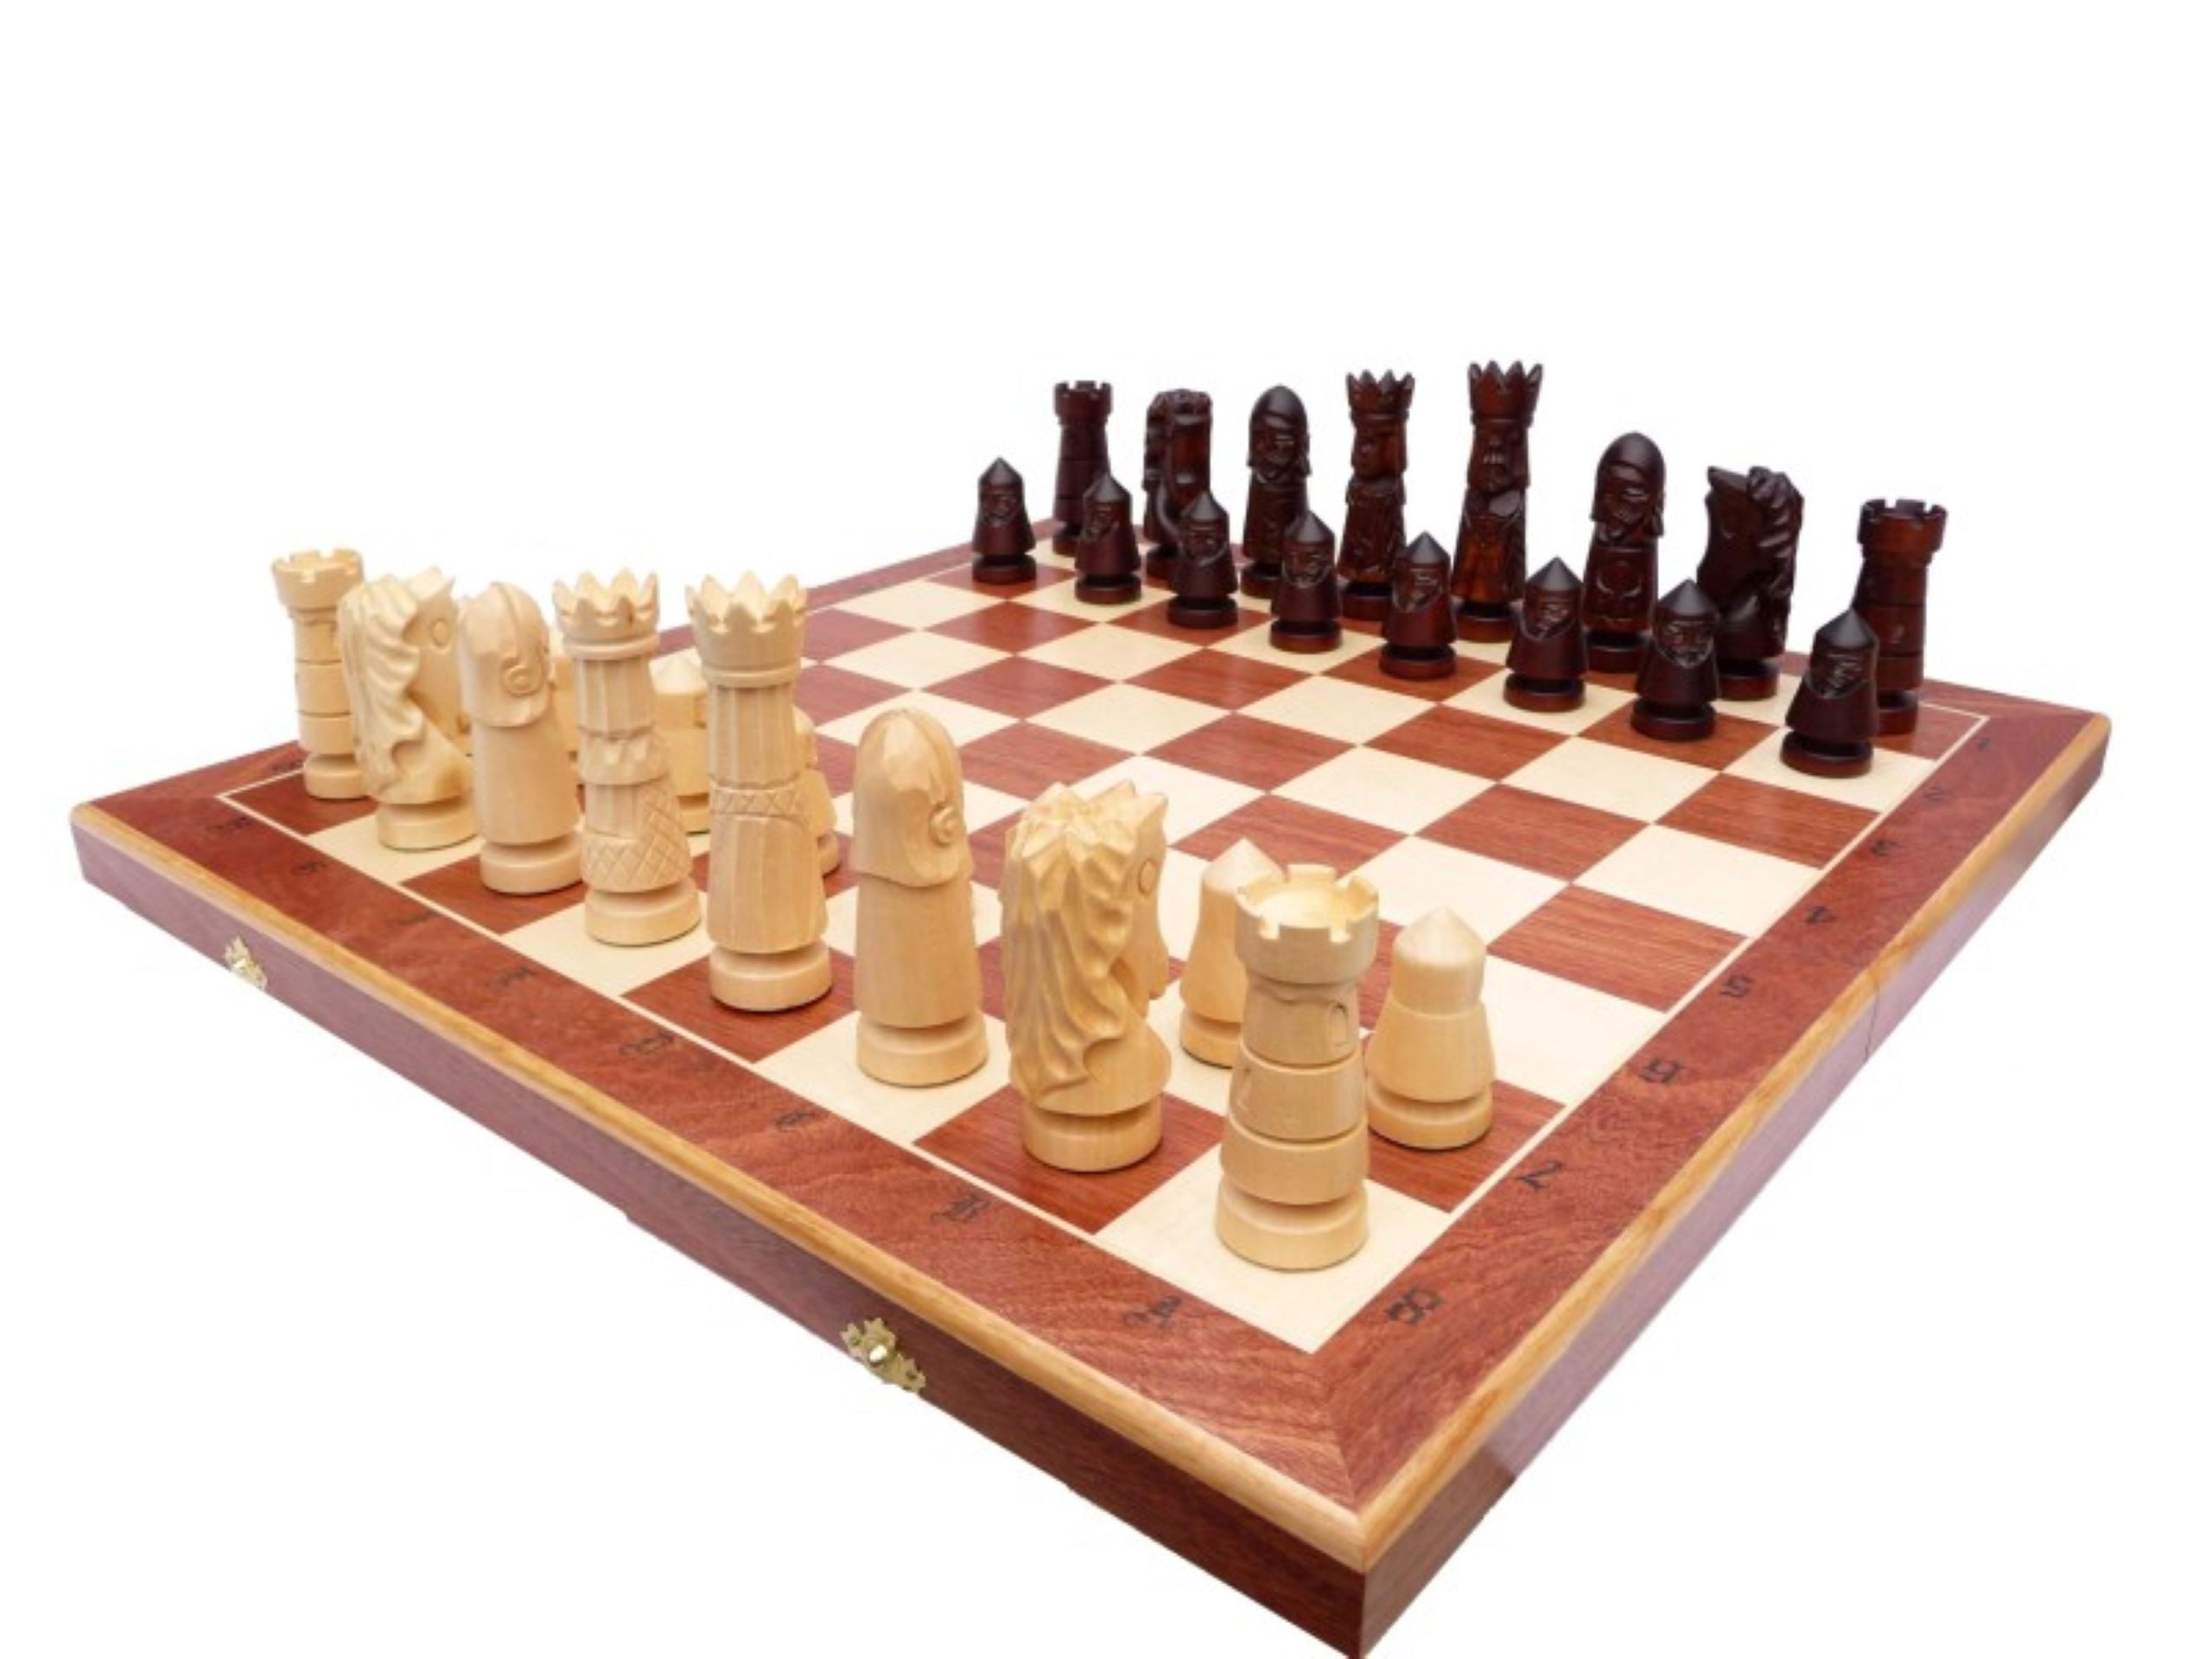 Holzprodukte Spiel, Edles grosses Schach Schachspiel 60 x 60 HANDGESCHNITZT NEU Holz